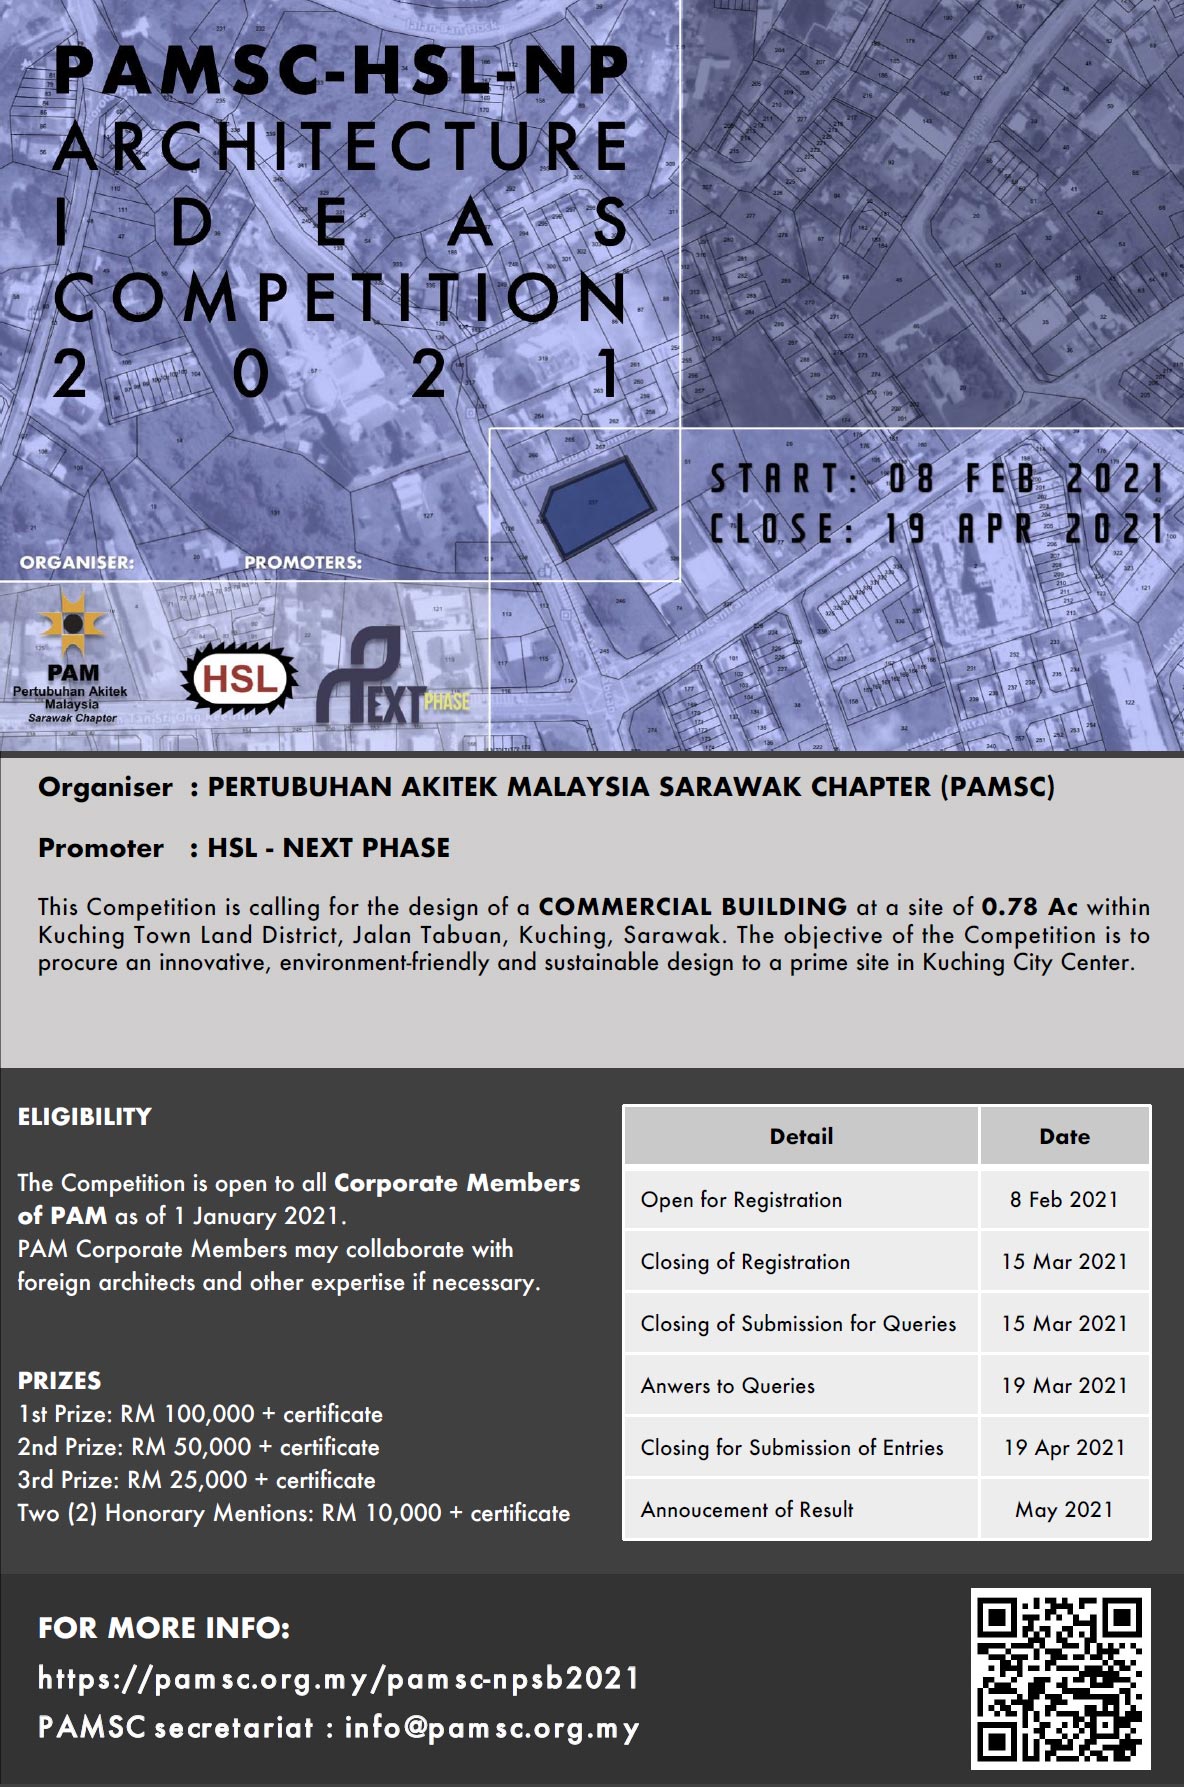 PAMSC-HSL-NP Architecture Ideas Competition 2021